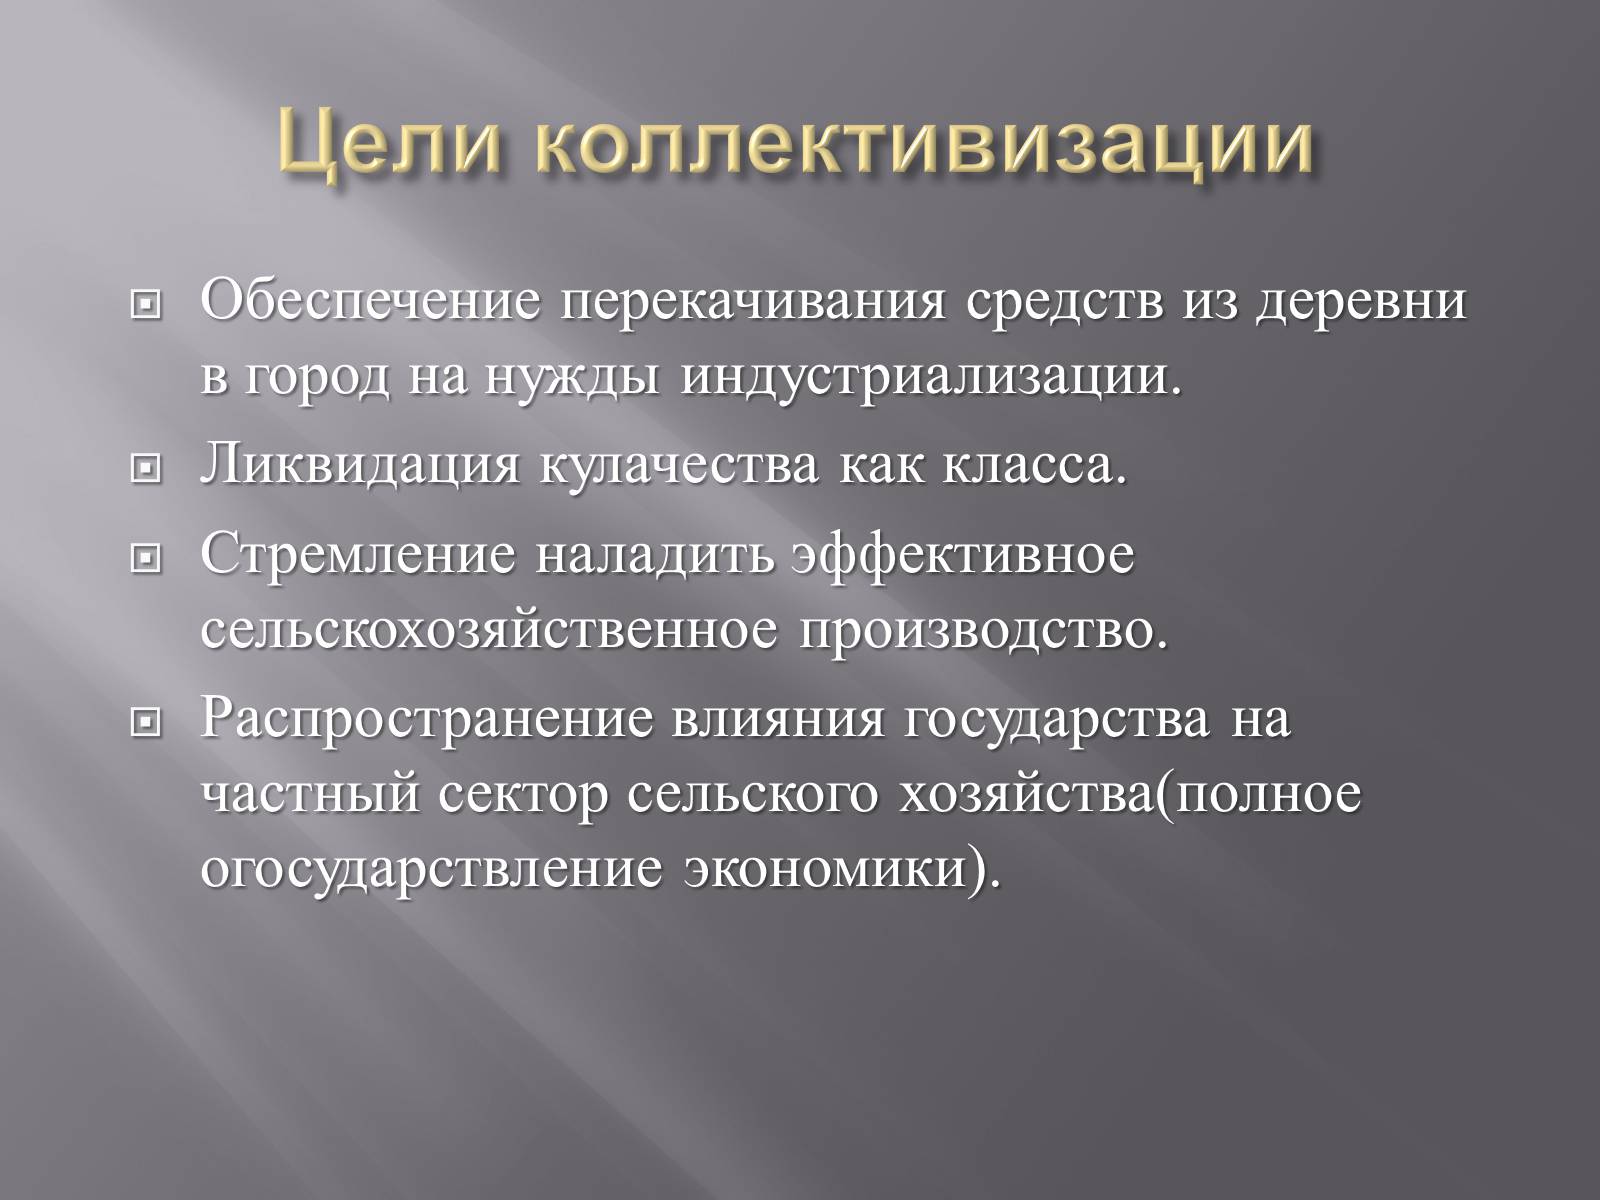 Презентація на тему «Сталинская модернизация СССР 1920-1930гг» - Слайд #16